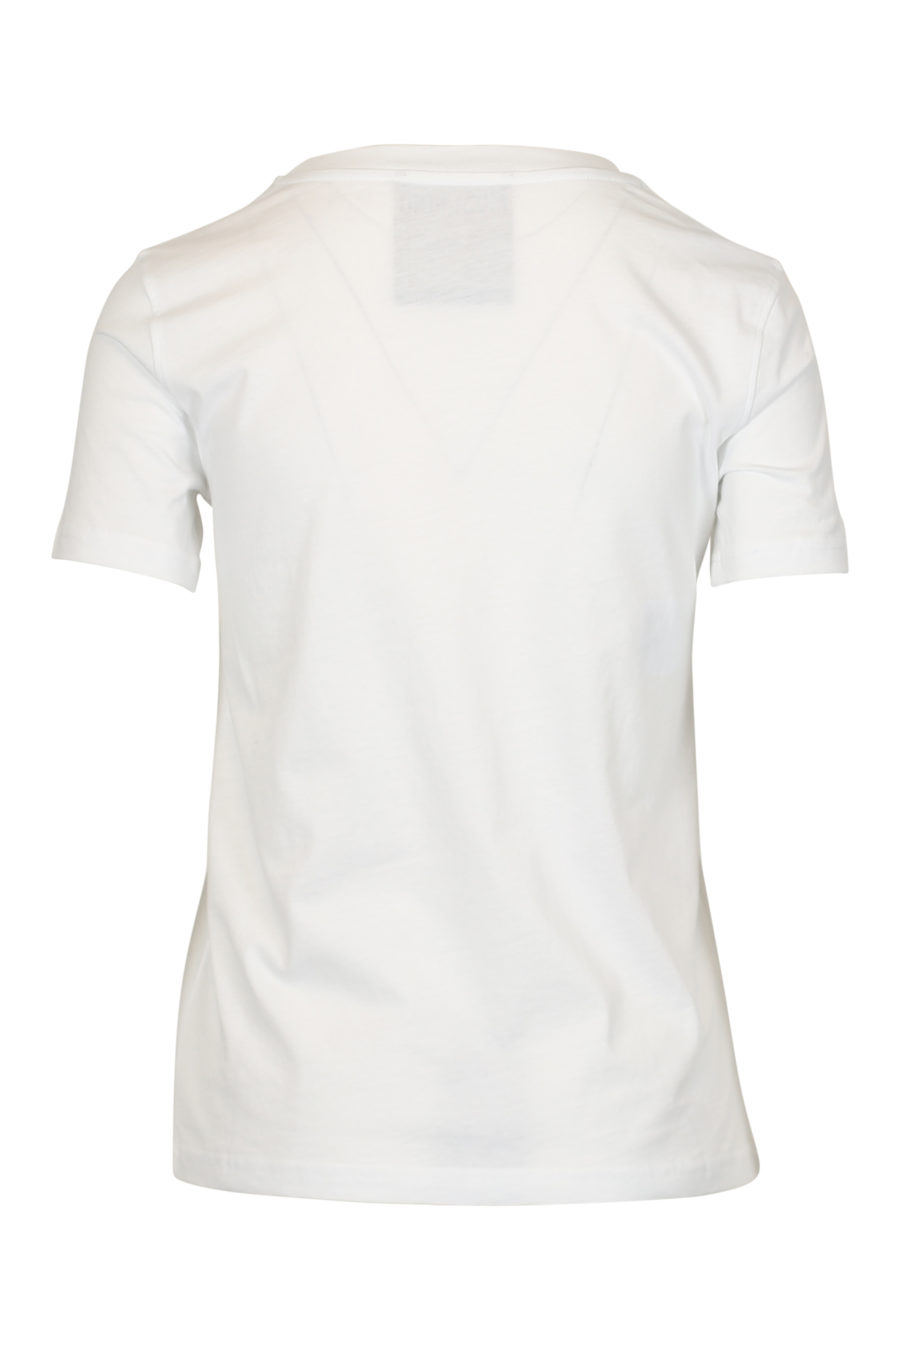 Camiseta blanca de manga corta "Couture" - IMG 3048